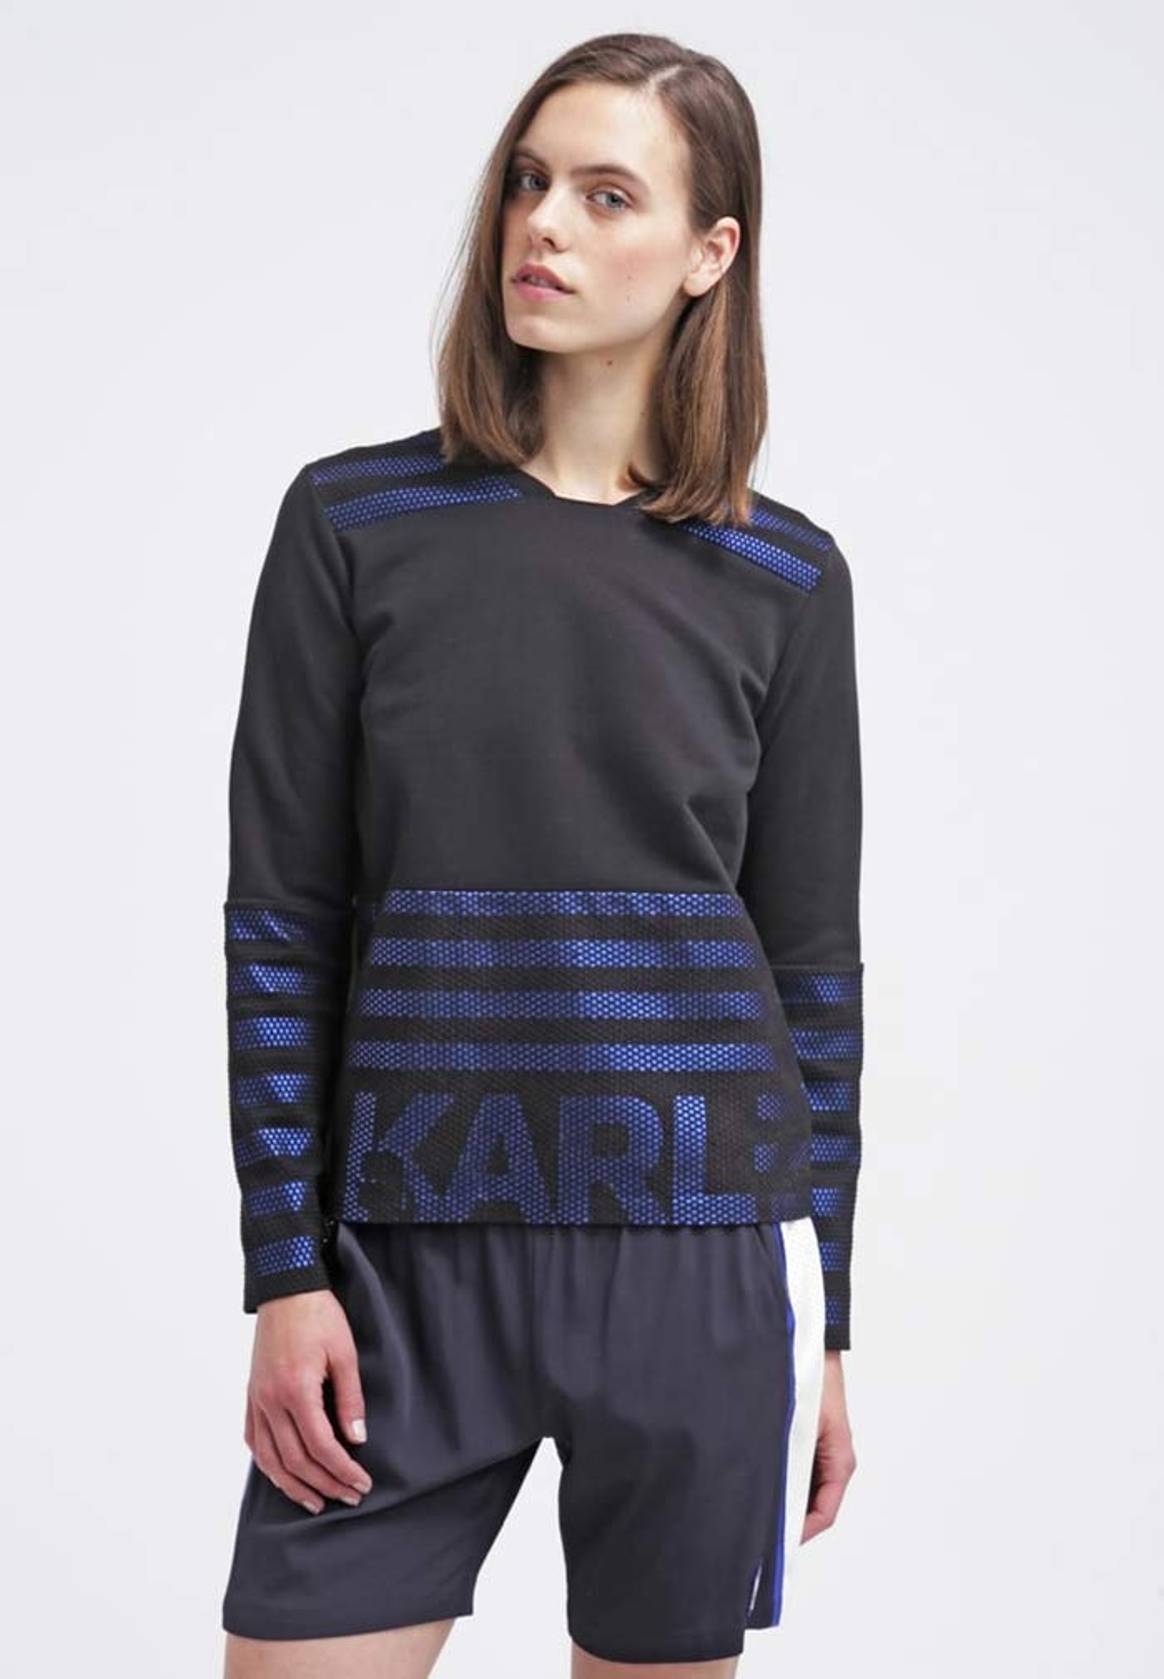 Karl Lagerfeld launches sportswear line